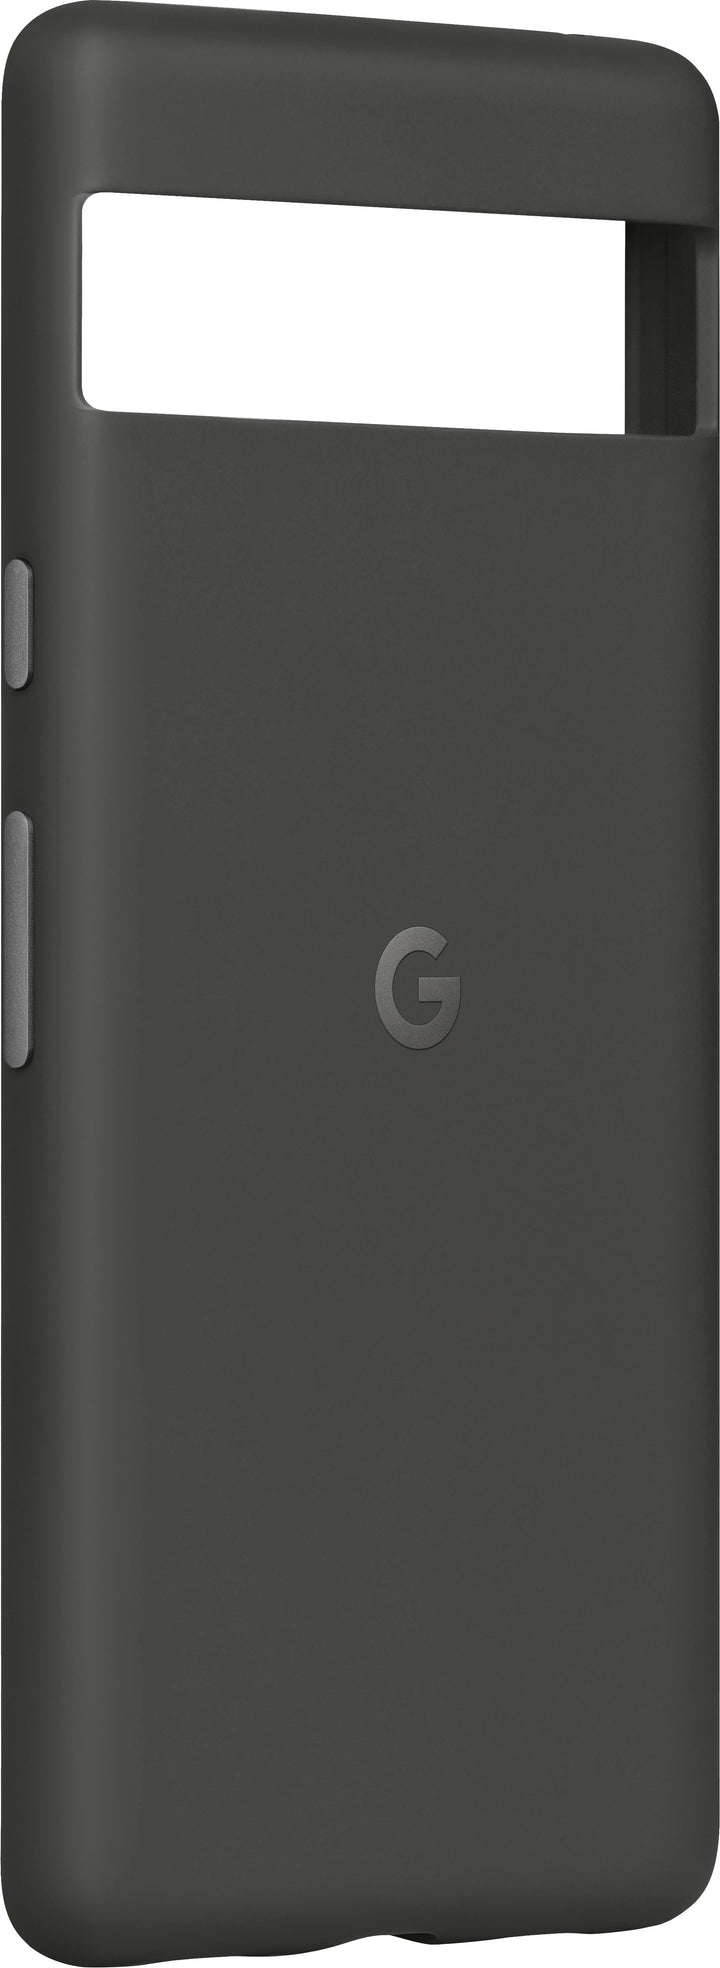 Google - Pixel 7a Case - Charcoal_2